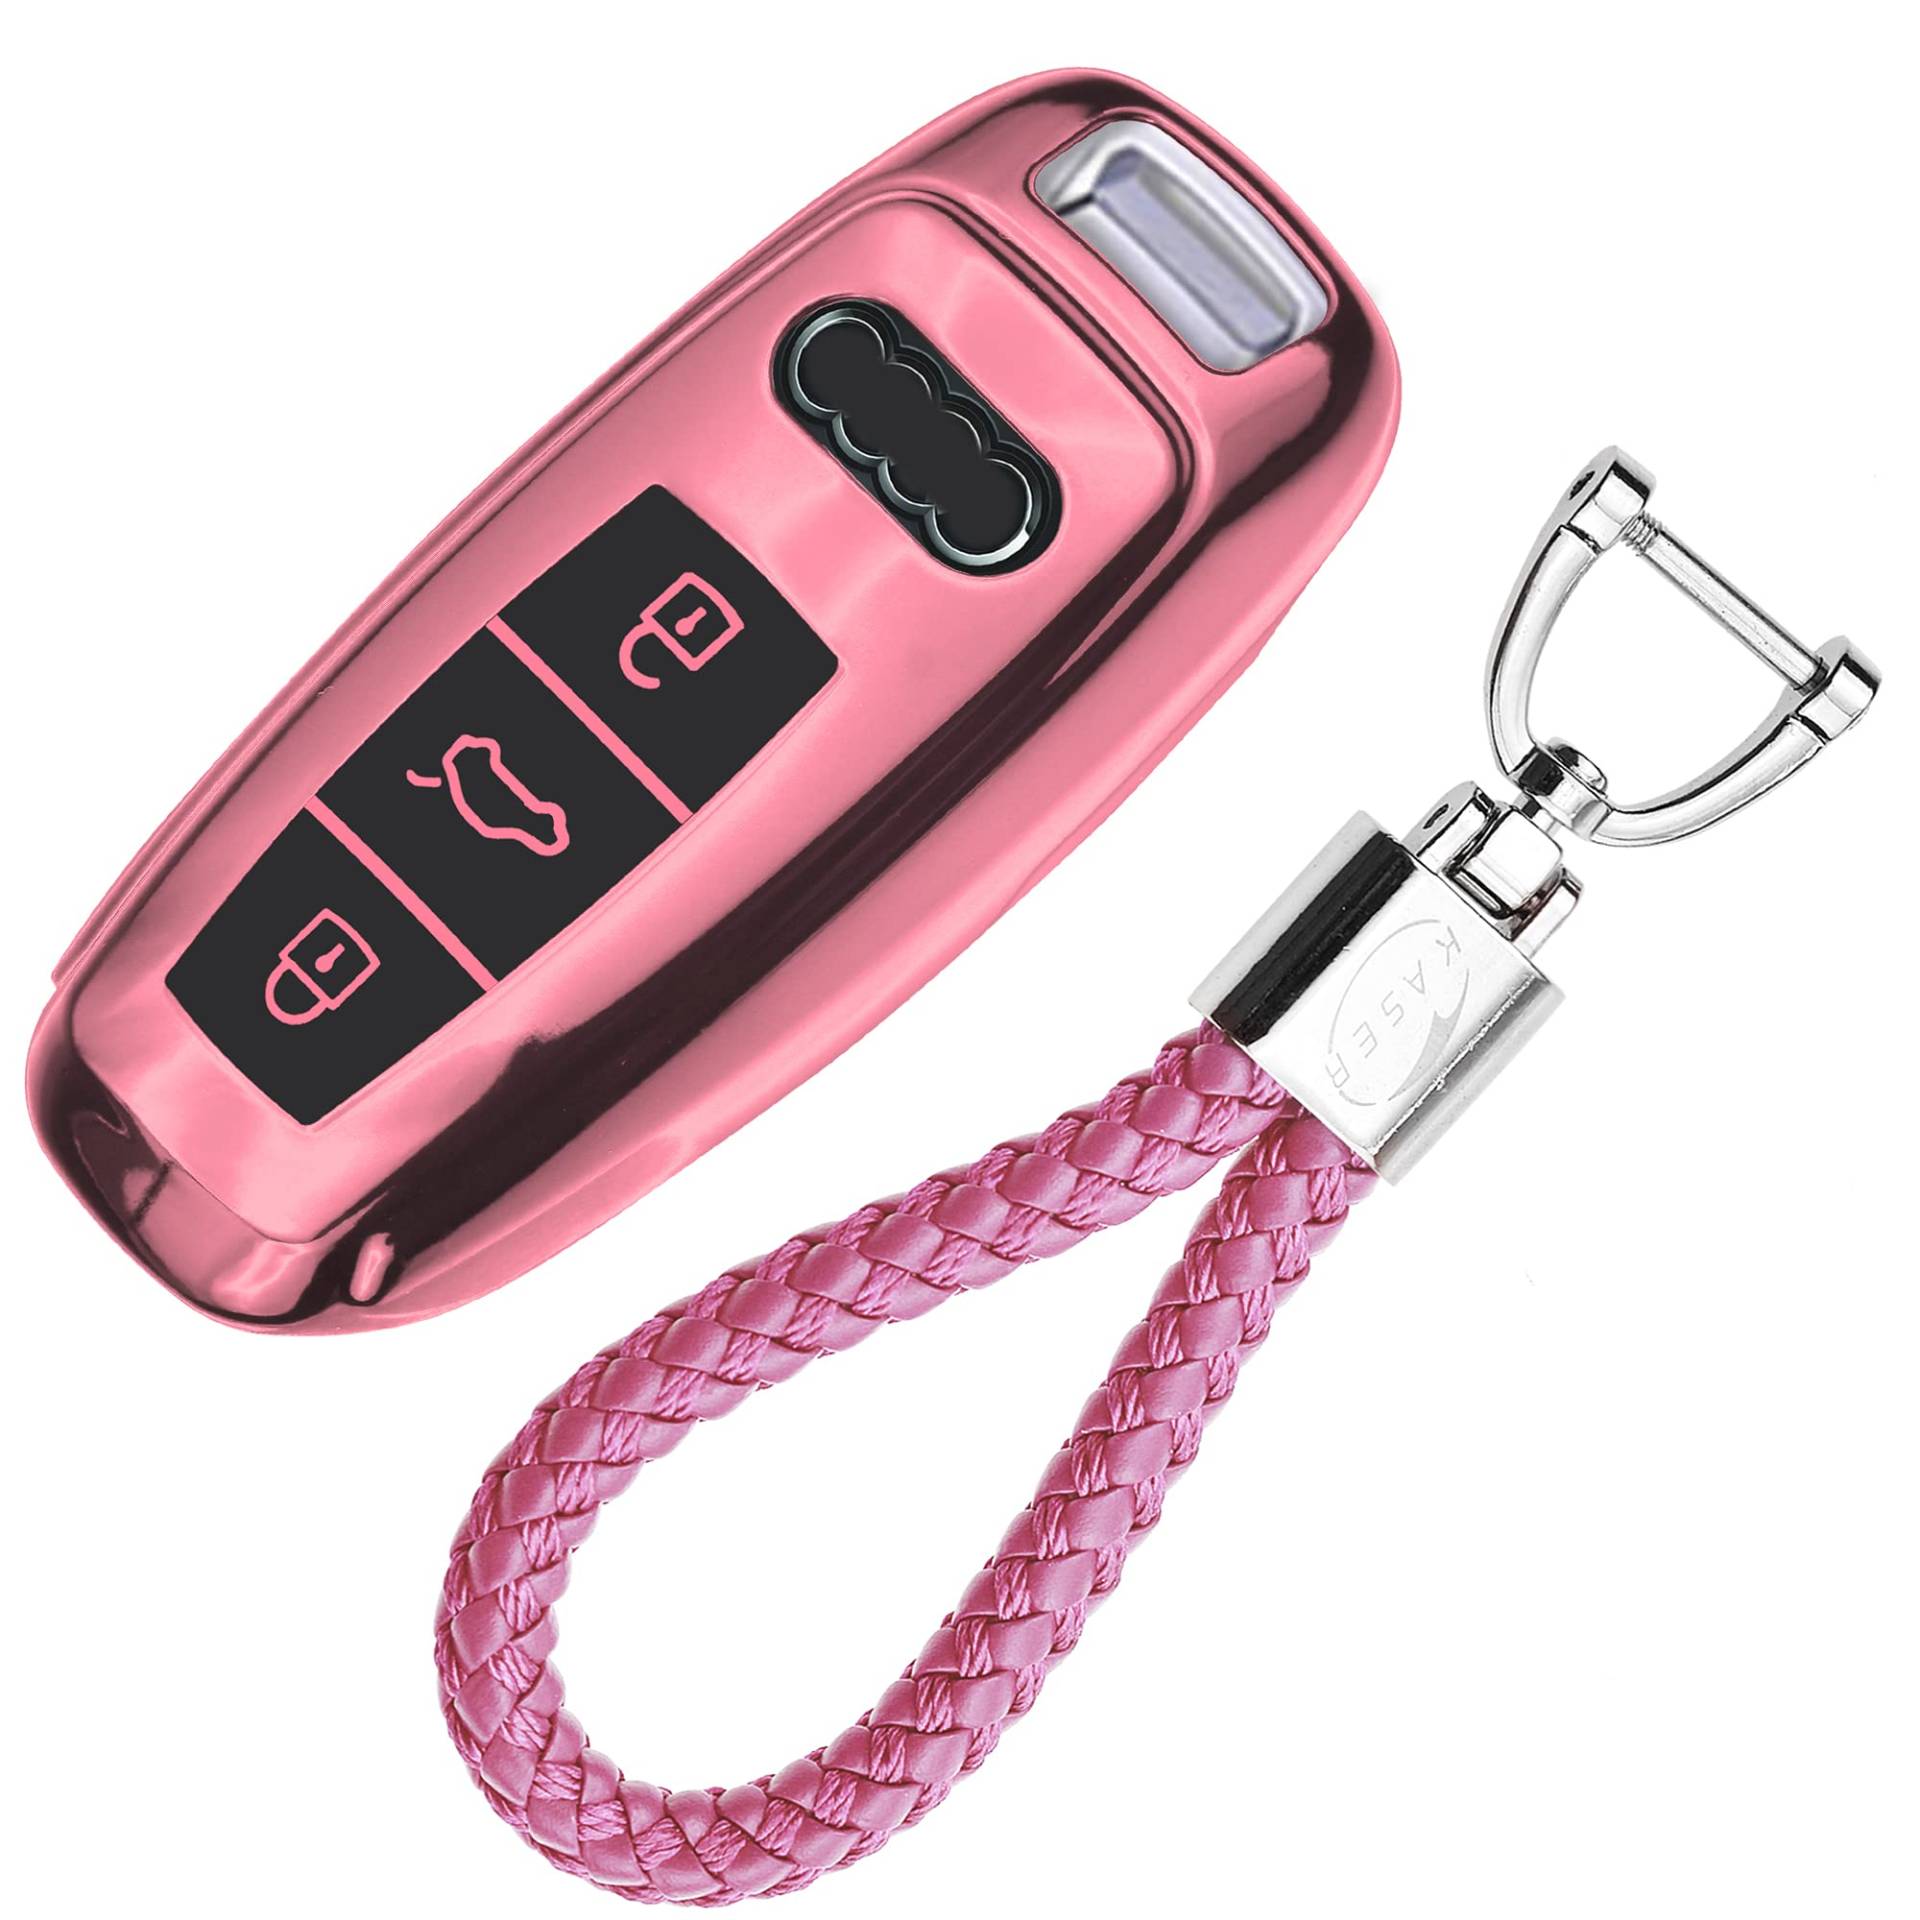 KASER Autoschlüssel Hülle kompatibel für Audi Cover TPU Silikon Hochglanz Schutzhülle Schlüsselhülle Fernbedienung Keyless A1 A3 A4 A5 A7 A8 Q3 Q5 Q7 TT Schlüsselbund (Pink) von Kaser